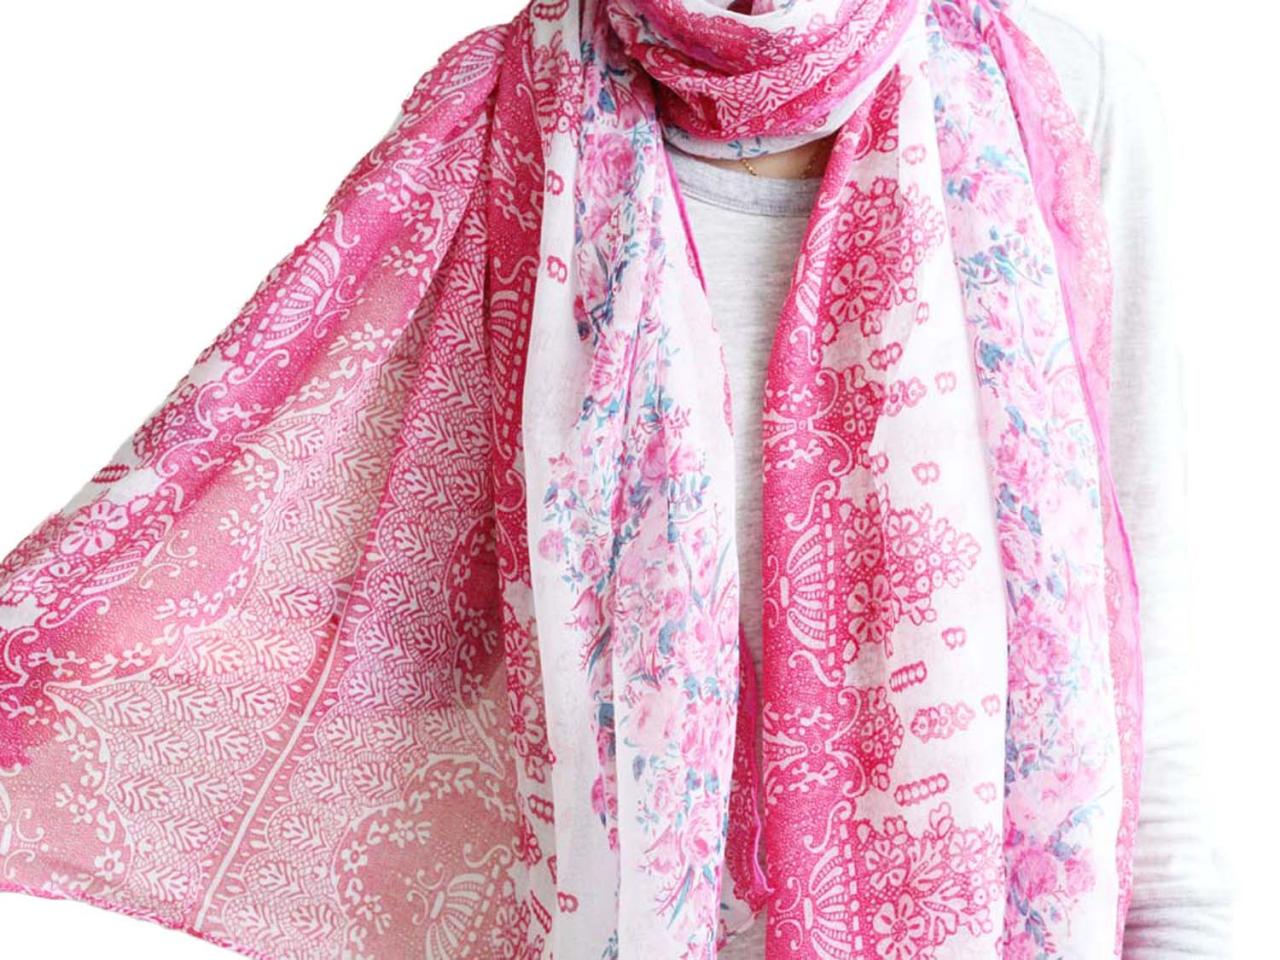 Rose Pink Sheer Cotton Floral Scarf Shawl Wrap Spring Summer Oversize Scarves